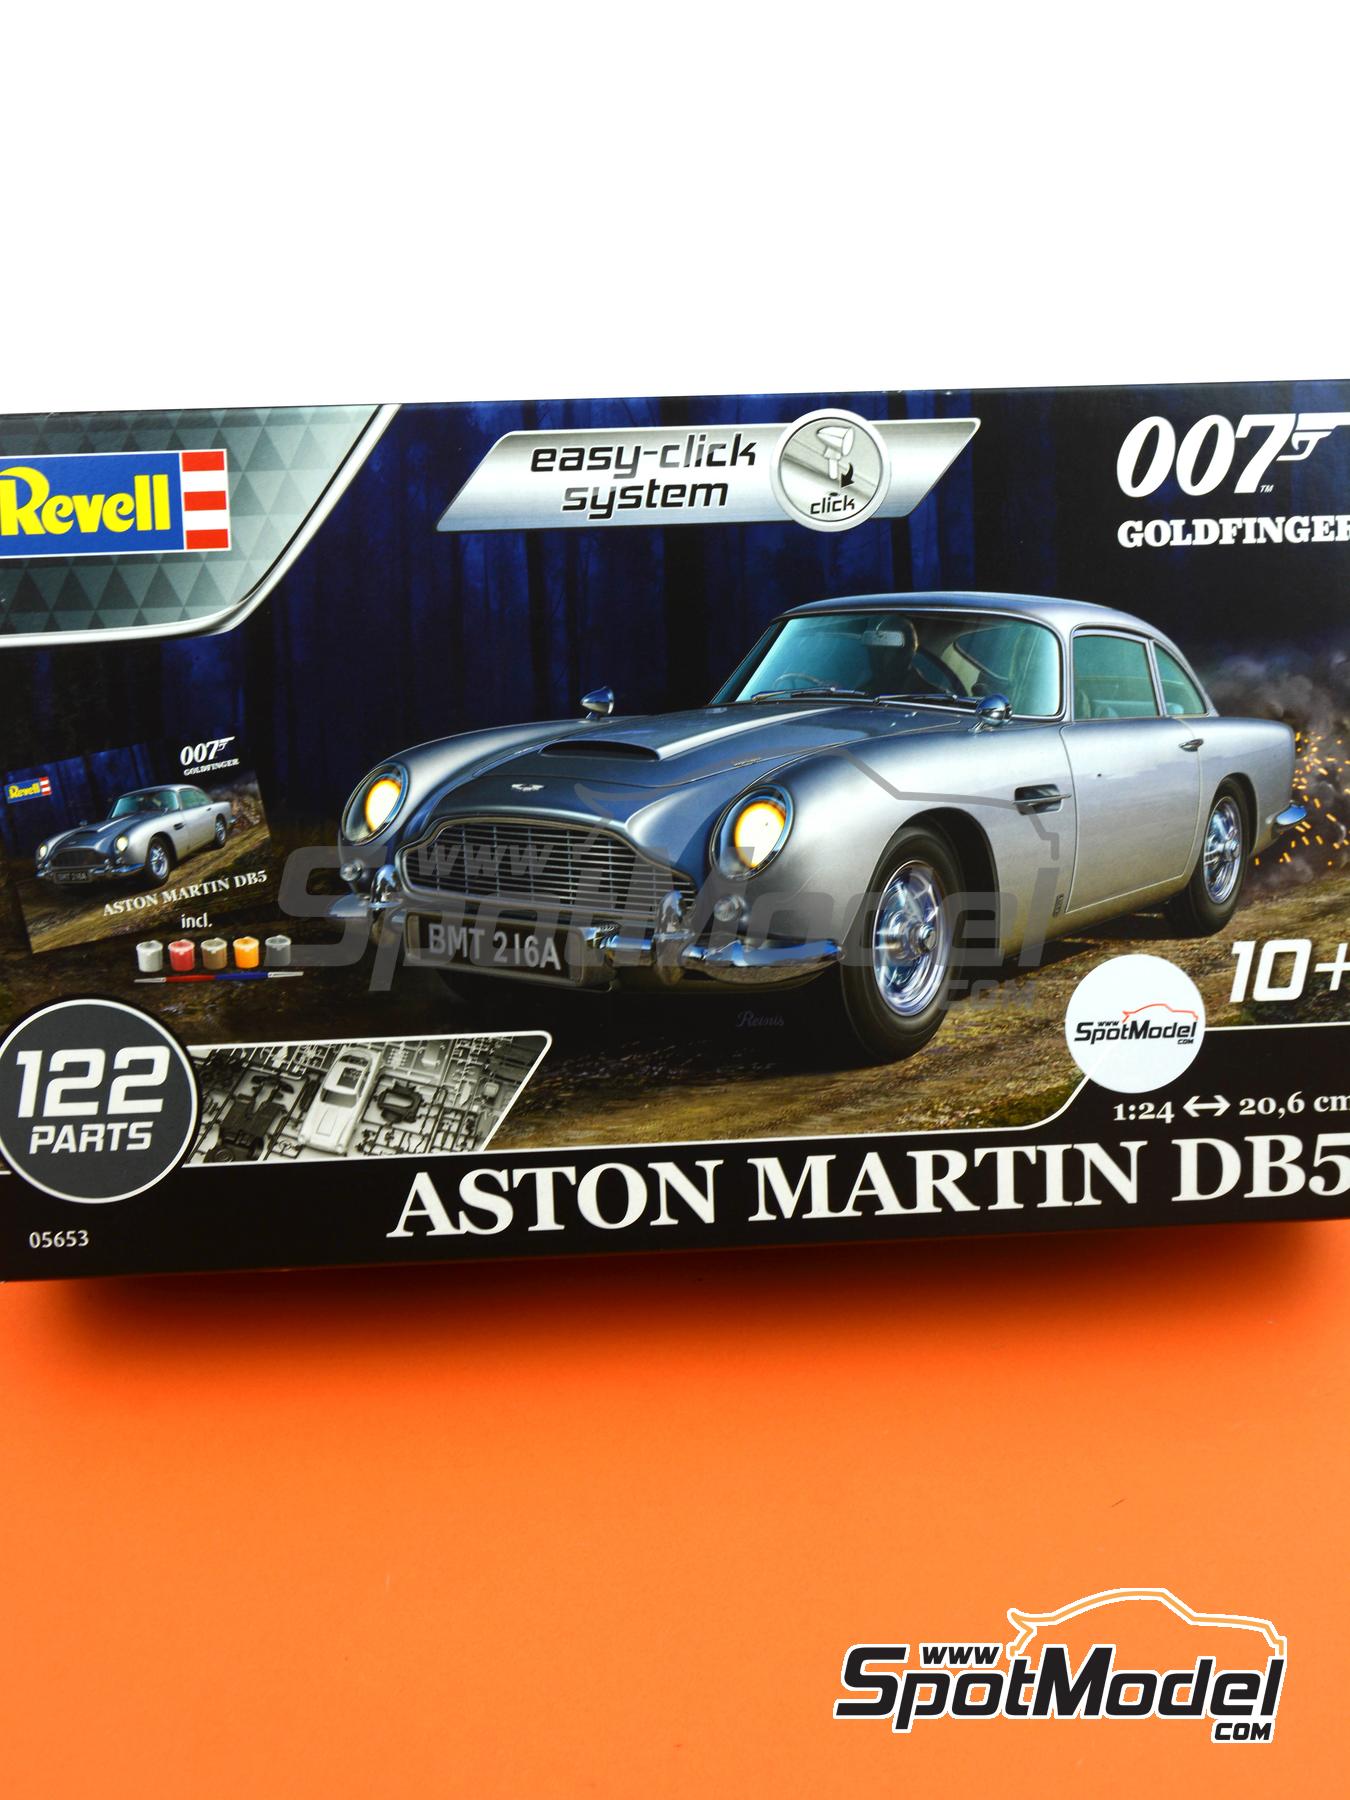 Revell 05653: Maqueta de coche escala 1/24 - Aston Martin DB5 - James Bond  007 Goldfinger - 5 x 10ml + 1 x 25gr (ref. REV05653)